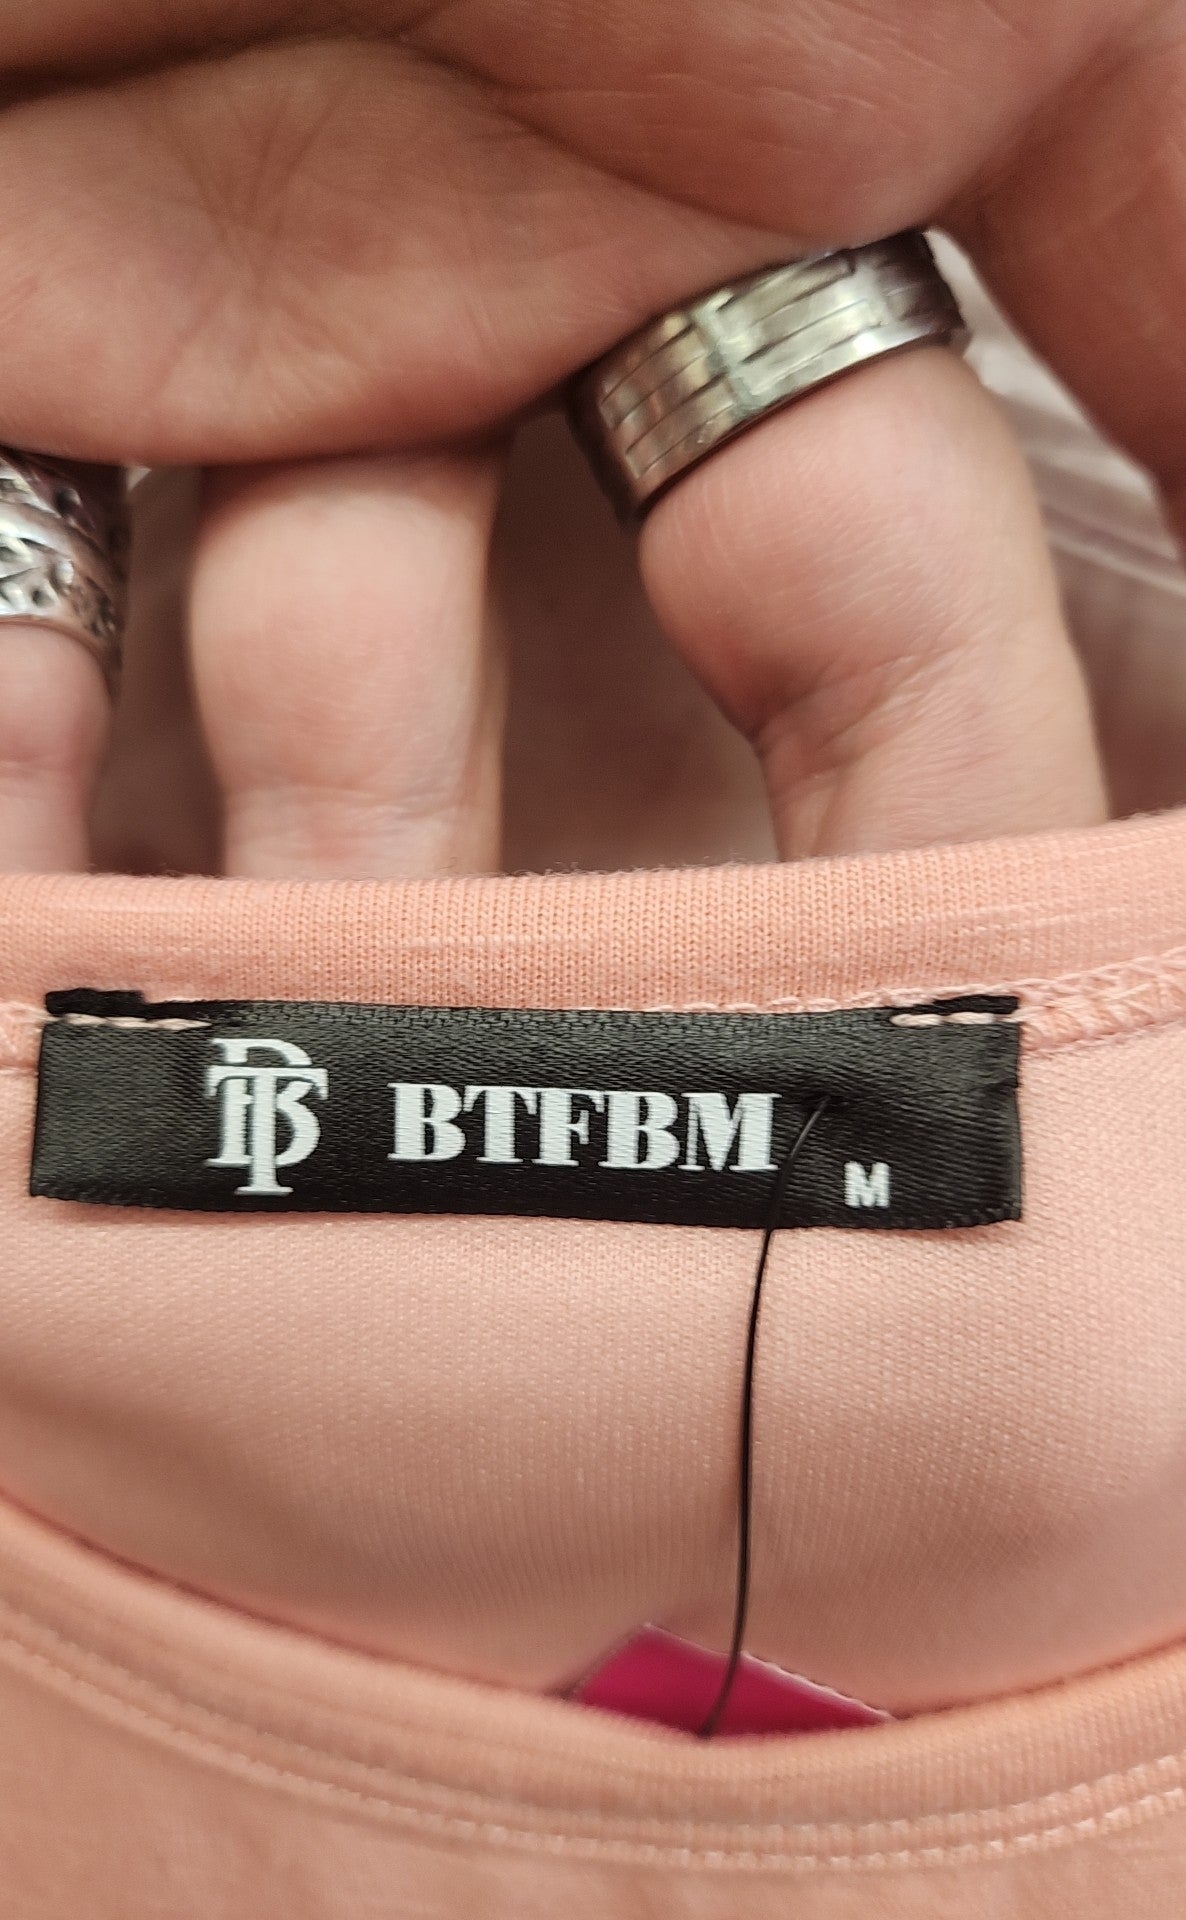 btfbm Women's Size M Pink Dress